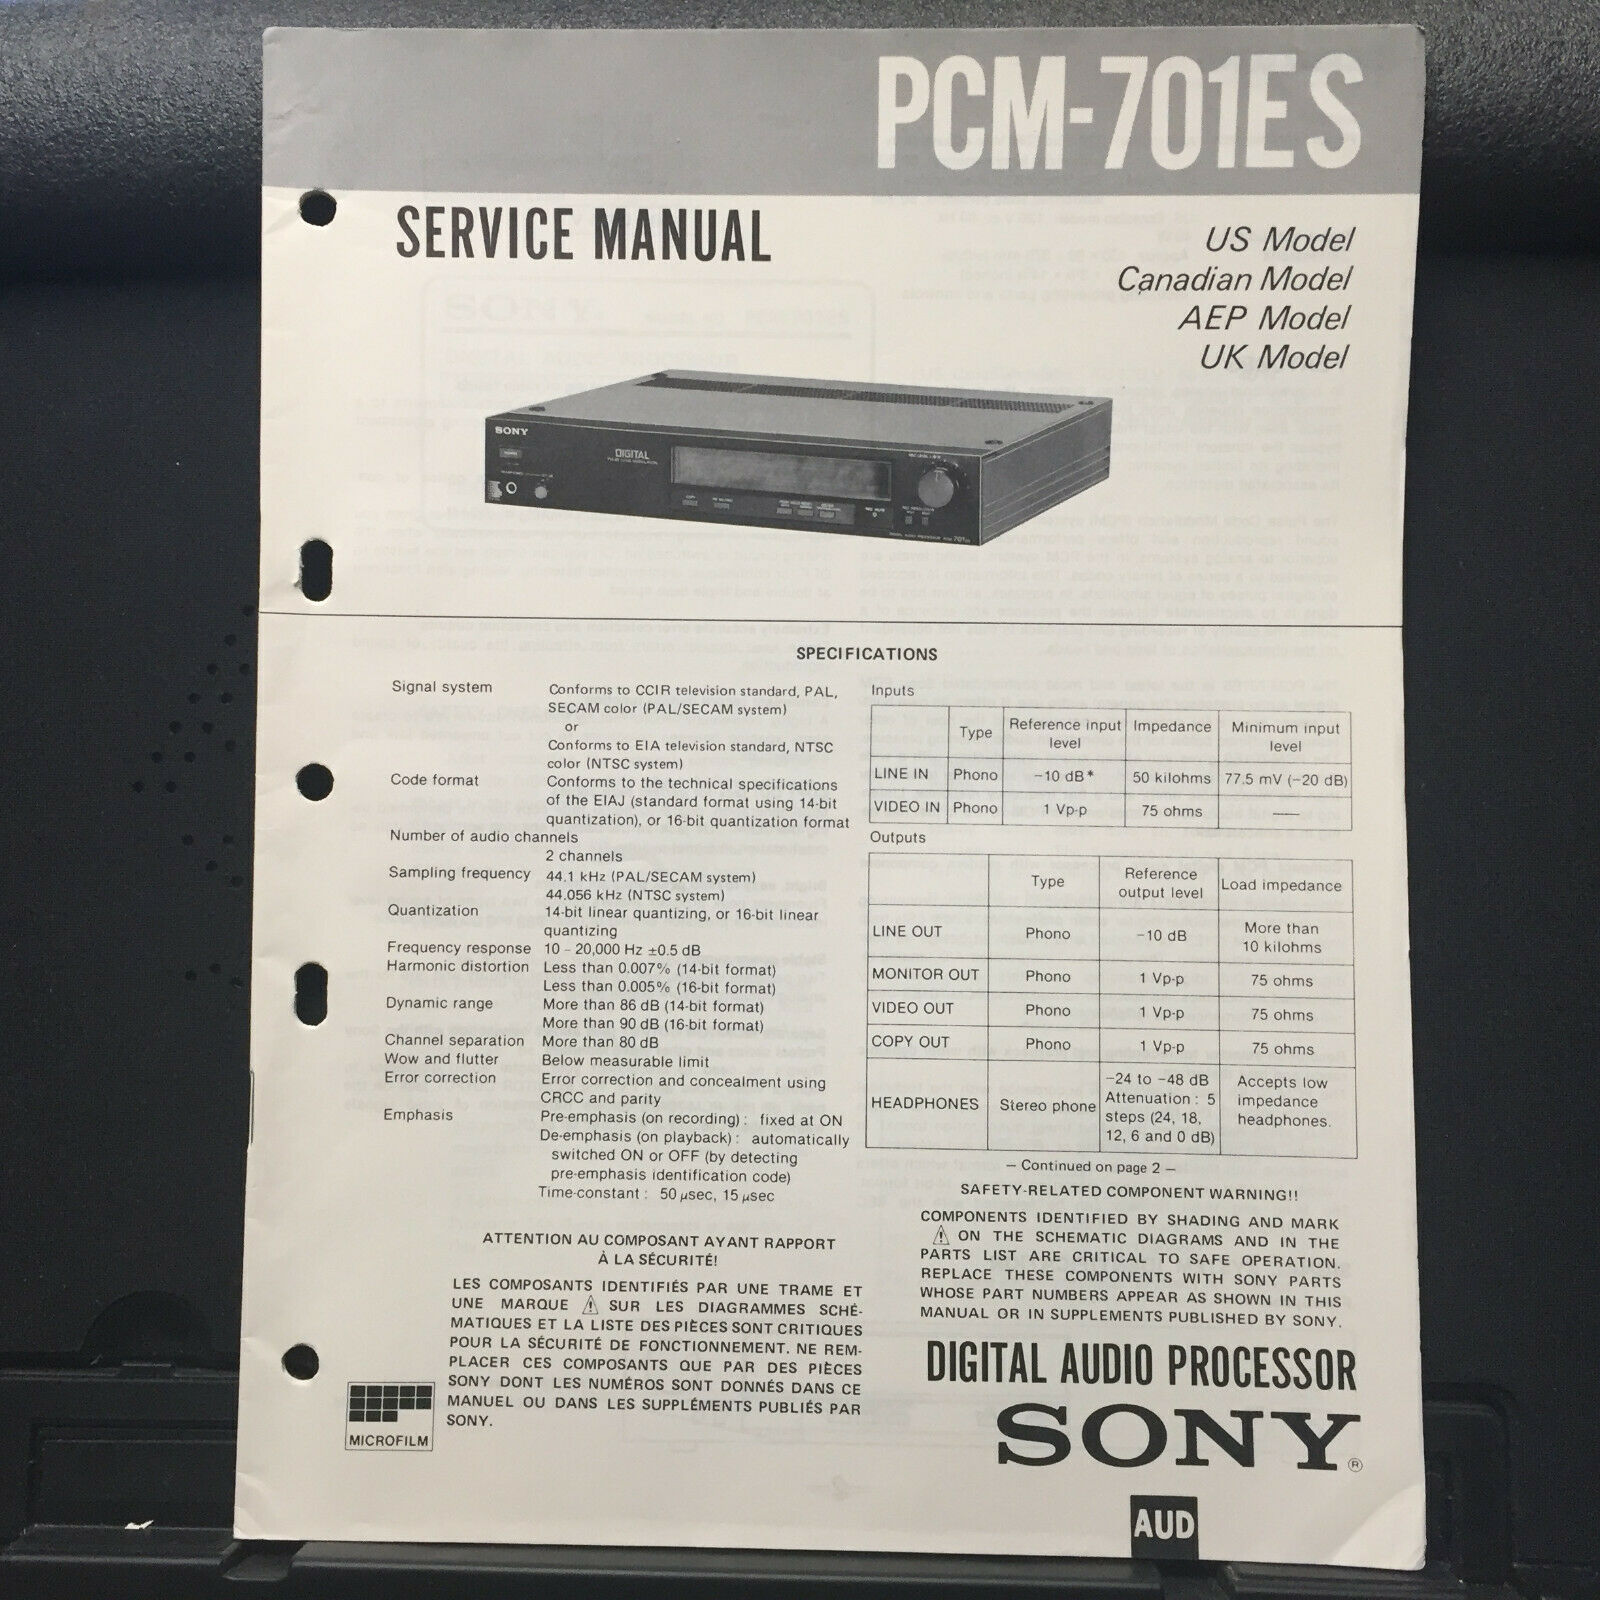 Sony Service Manual For The Pcm-701es Dap Processor ~ Original Manual